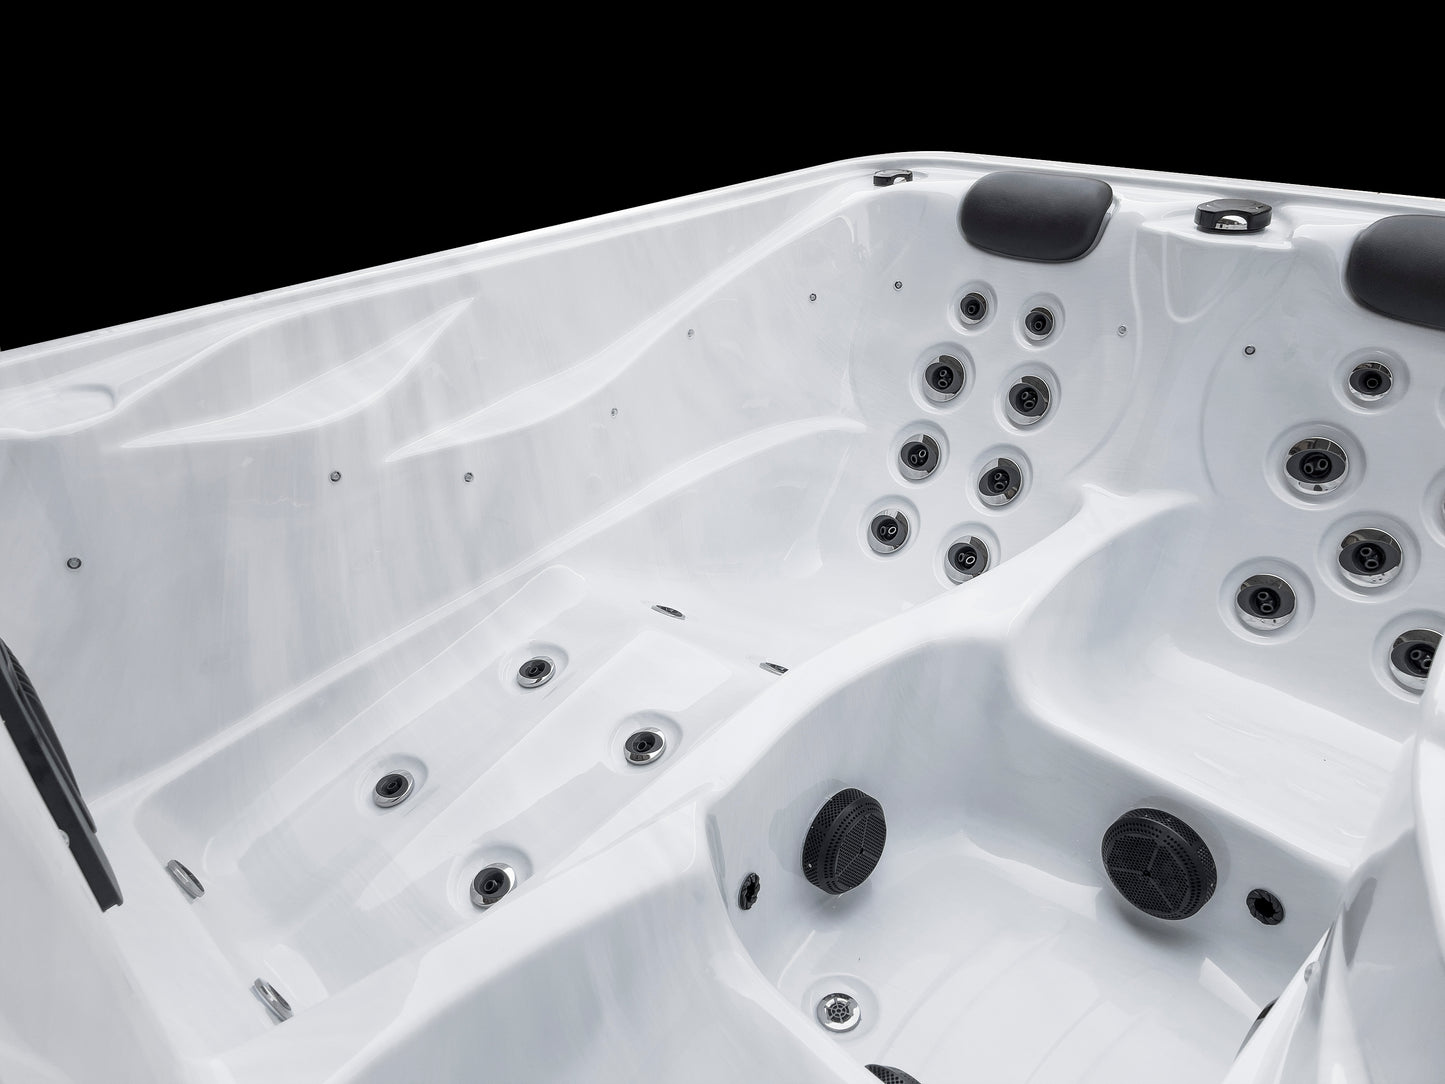 Zeus Pro Plug & Play Hot Tub | 3 Persons | Hot Tub Suppliers